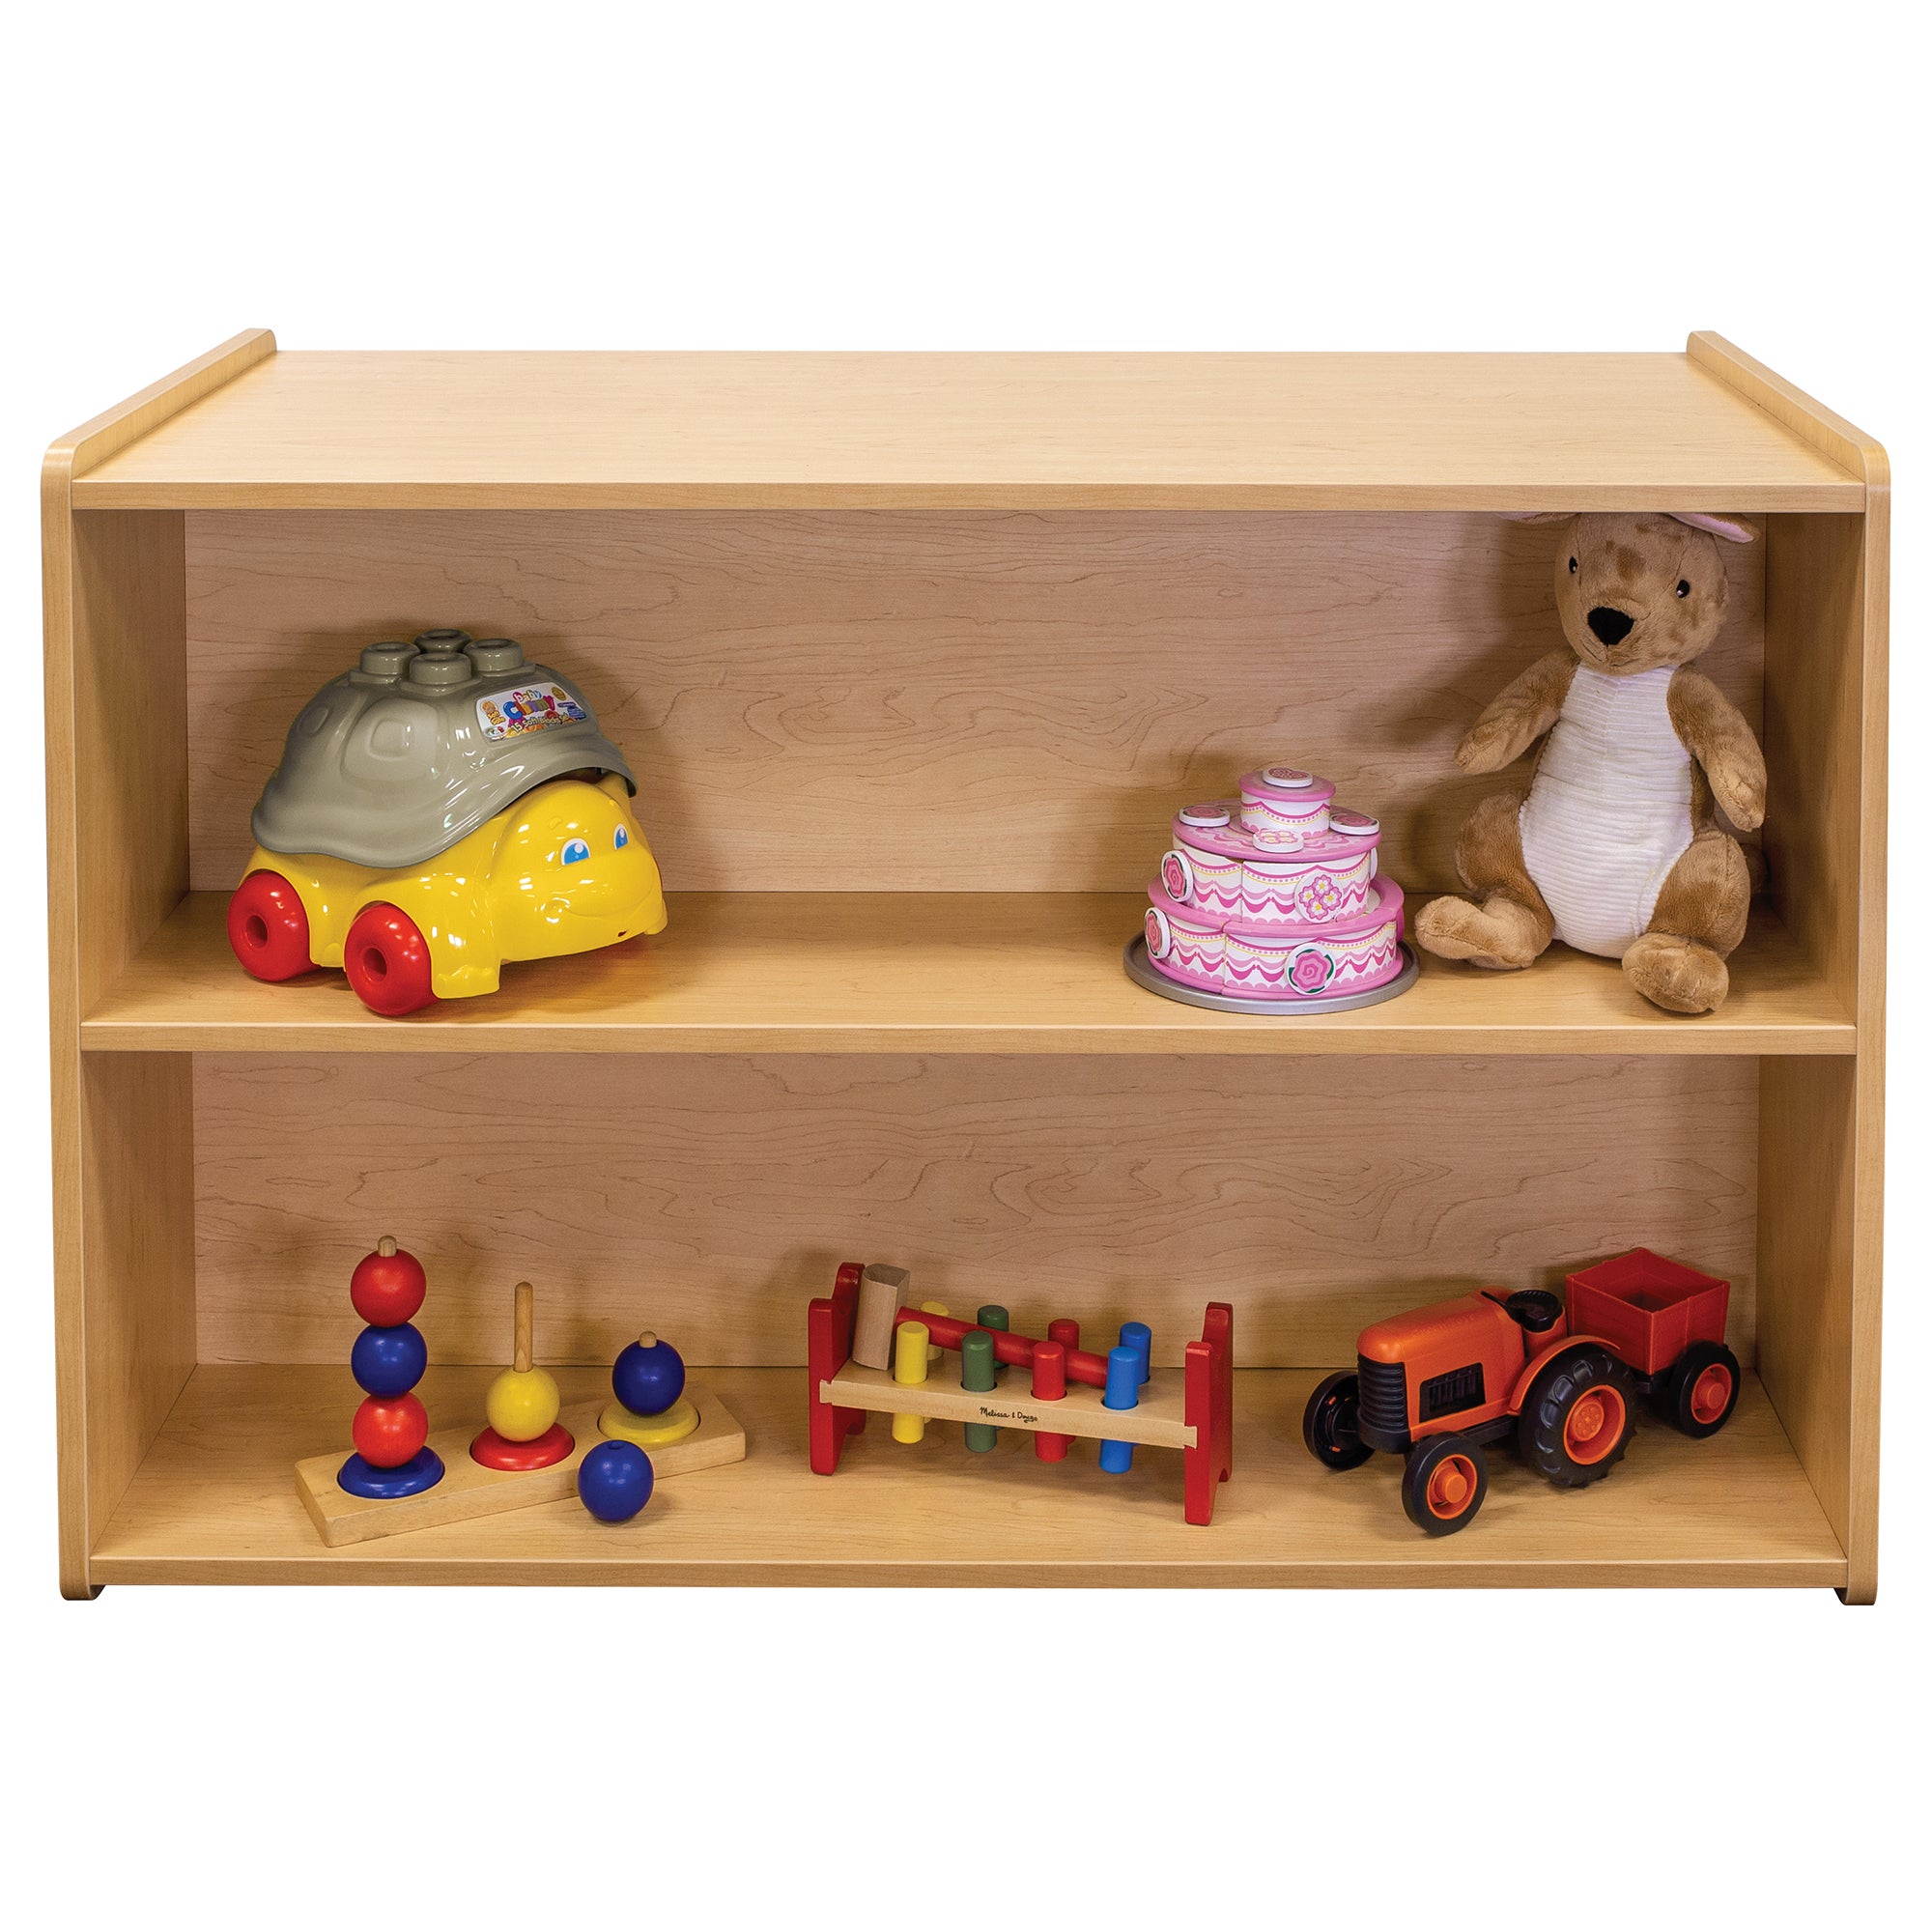 Preschool double sided shelf storage for toys.